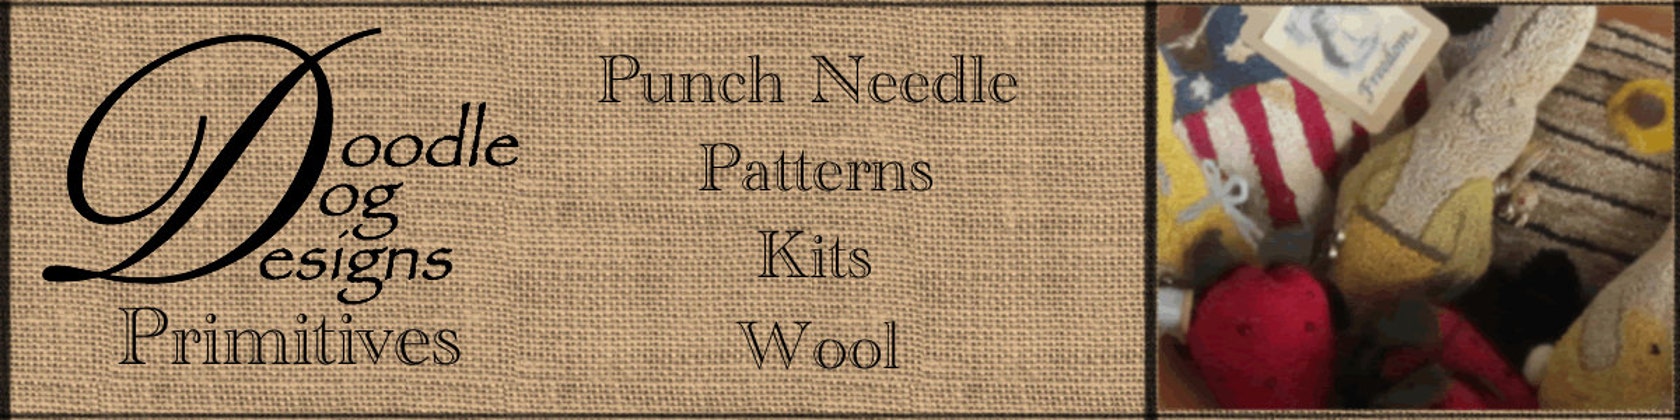 Punch Needle Archives - DoodleDog Designs Primitives